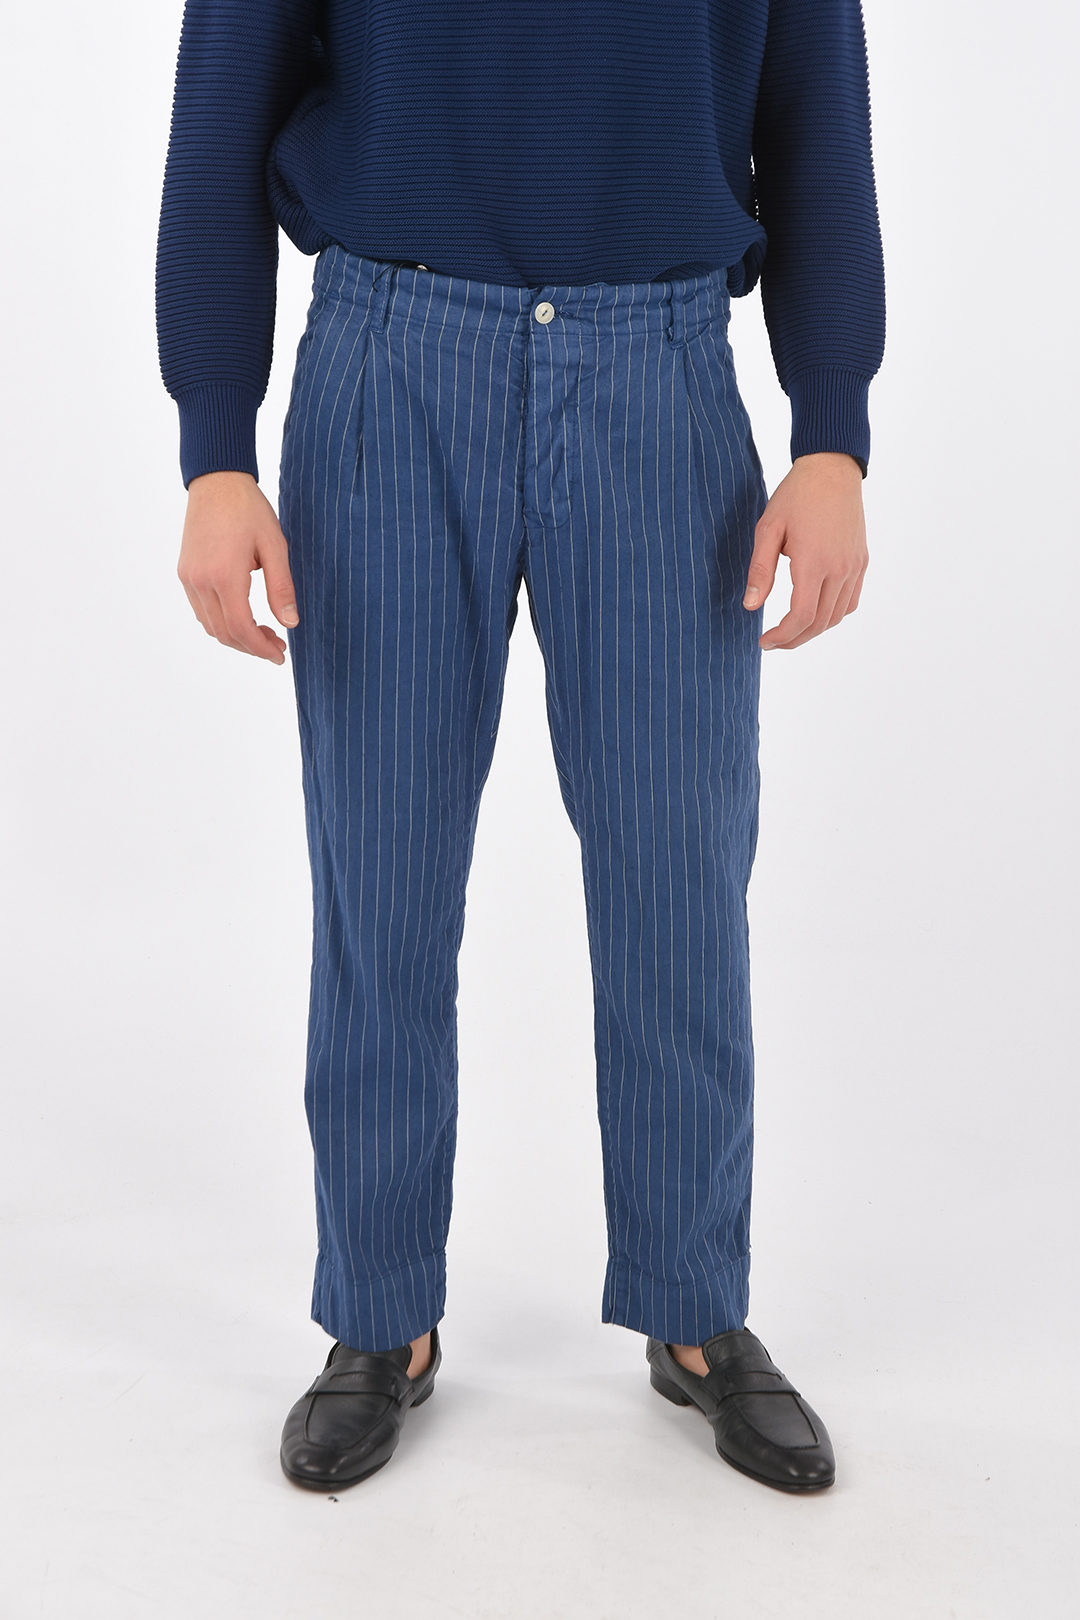 Original Vintage Style pinstriped AETON single pleat trousers men   Glamood Outlet